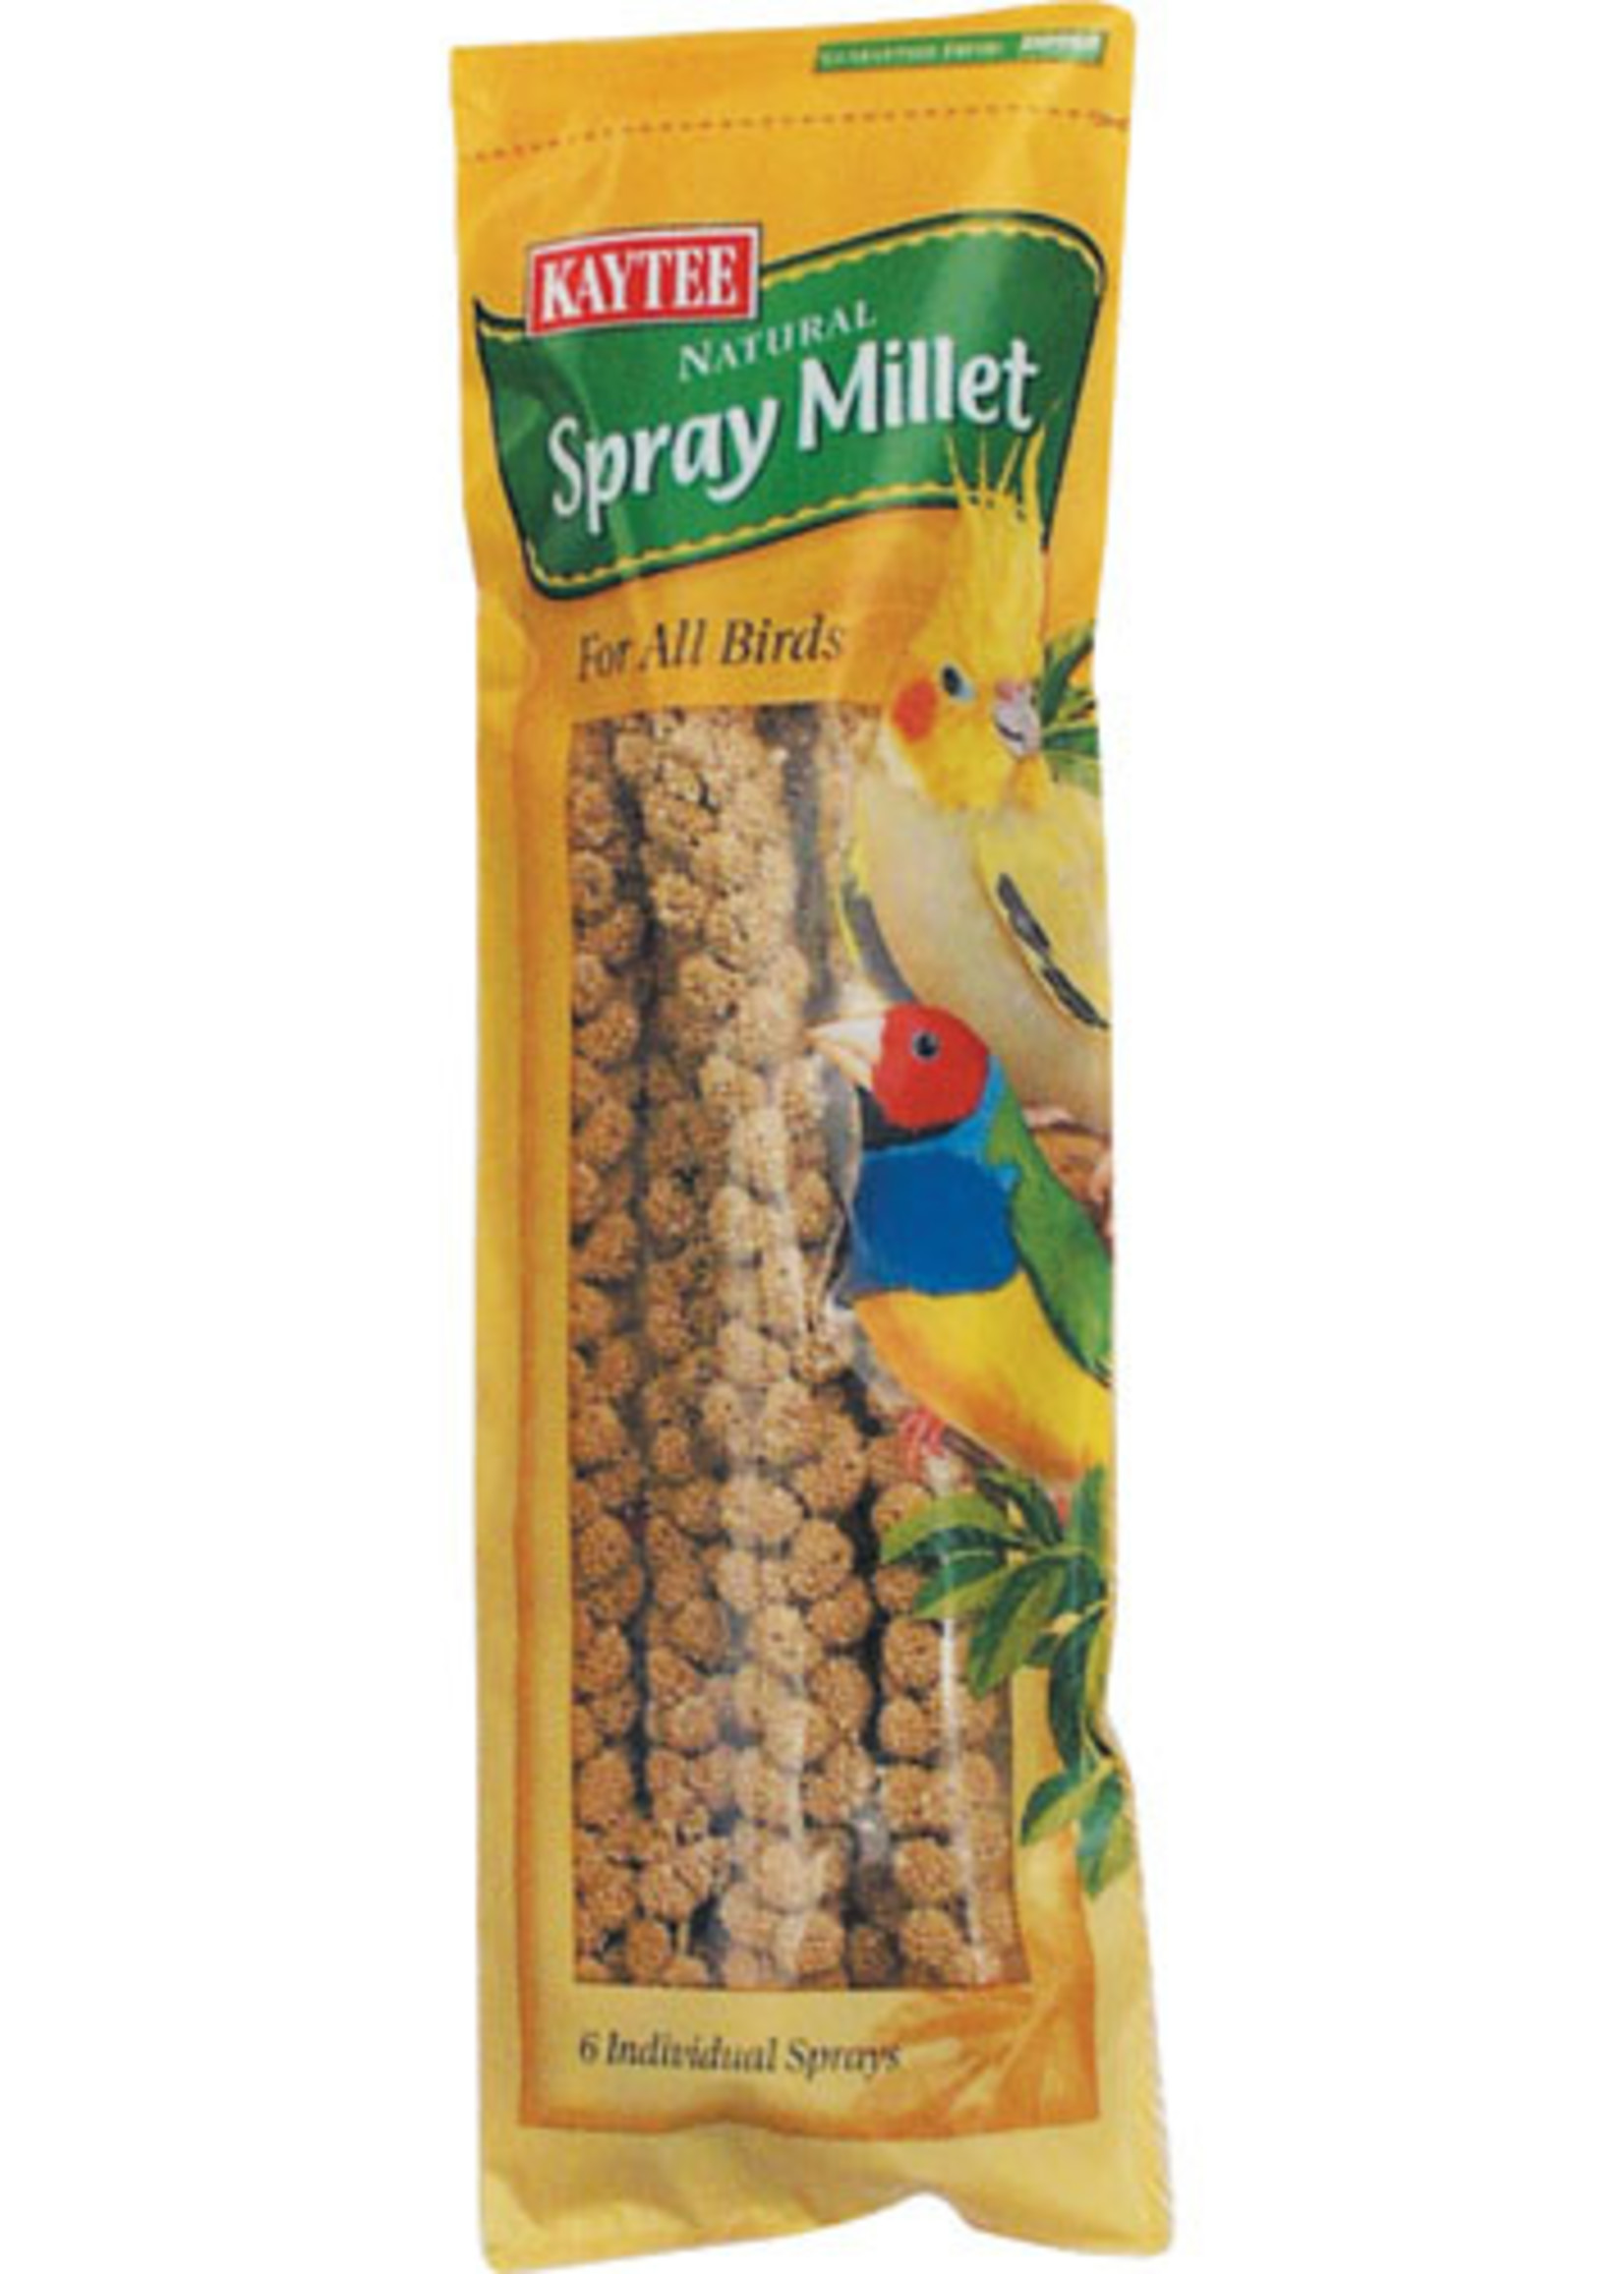 Kaytee® Kaytee® Natural Spray Millet